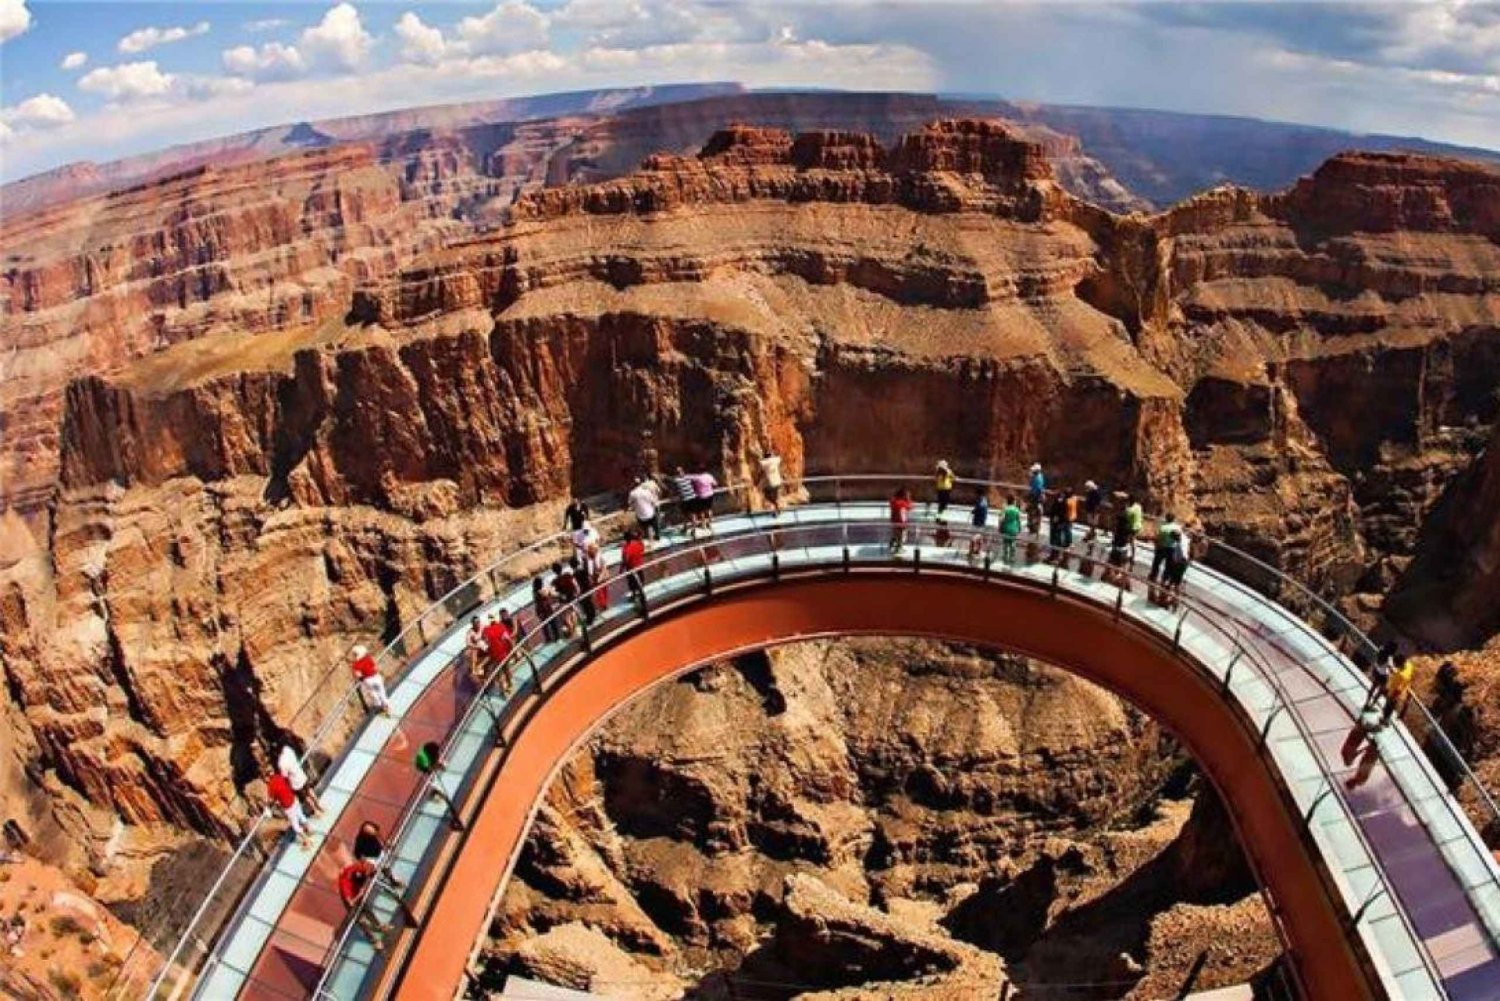 Las Vegasista: Grand Canyon & Hoover Dam Tour with Skywalk: Grand Canyon & Hoover Dam Tour with Skywalk